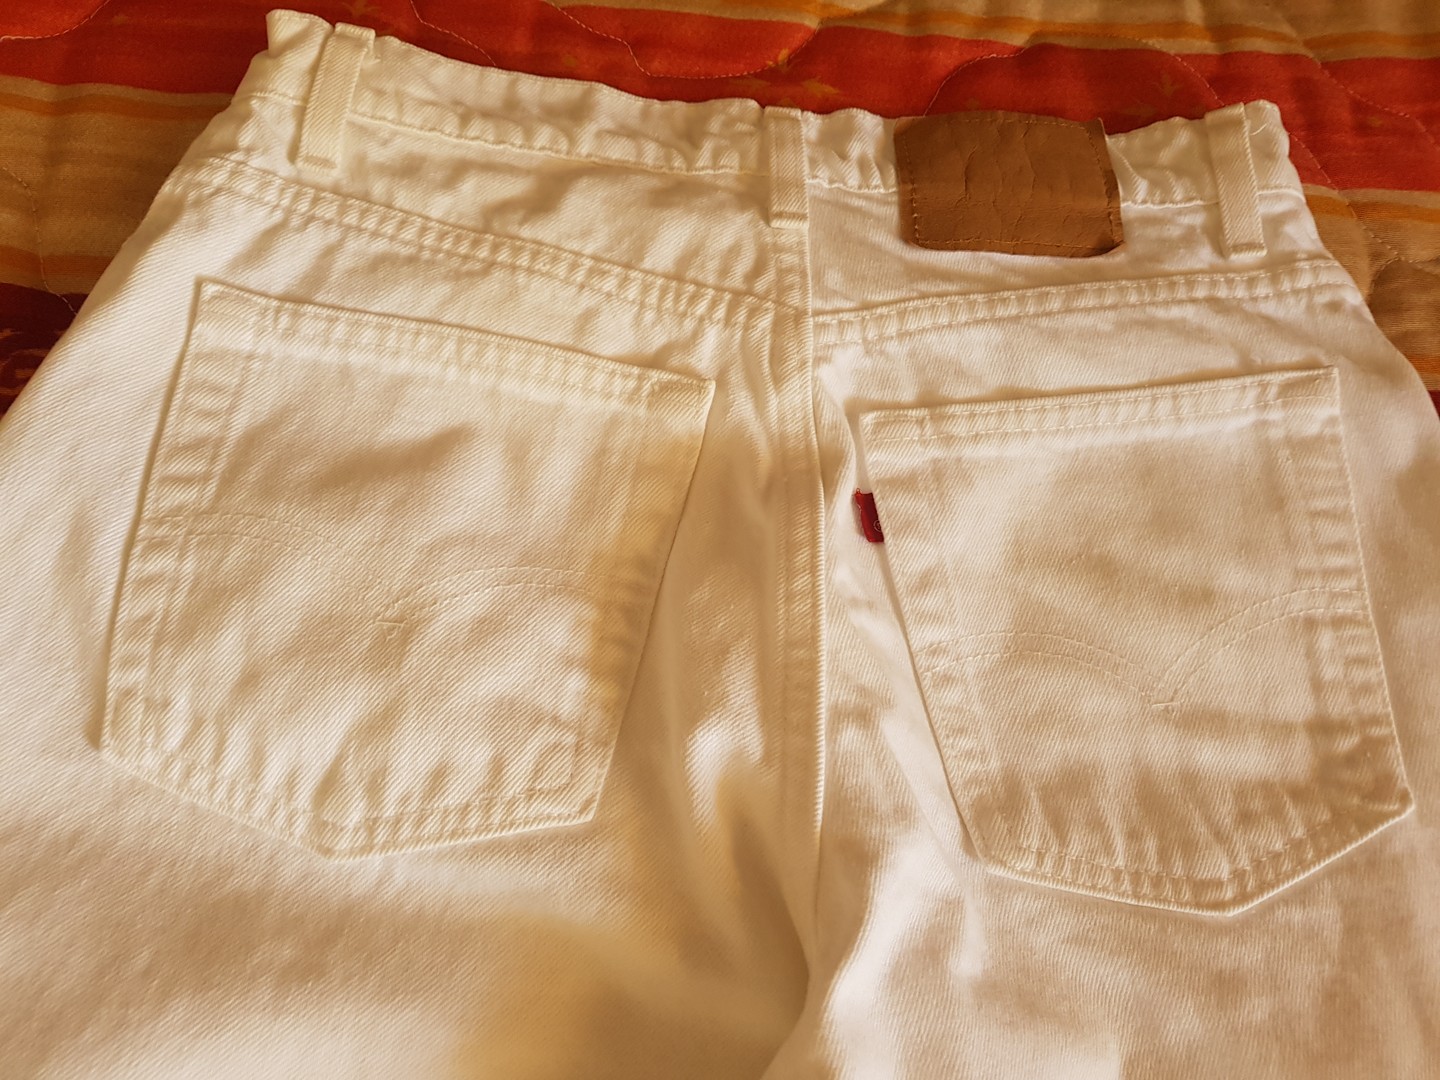 Pantalón blanco tela de jeans de algodón, marca Levi's. 0